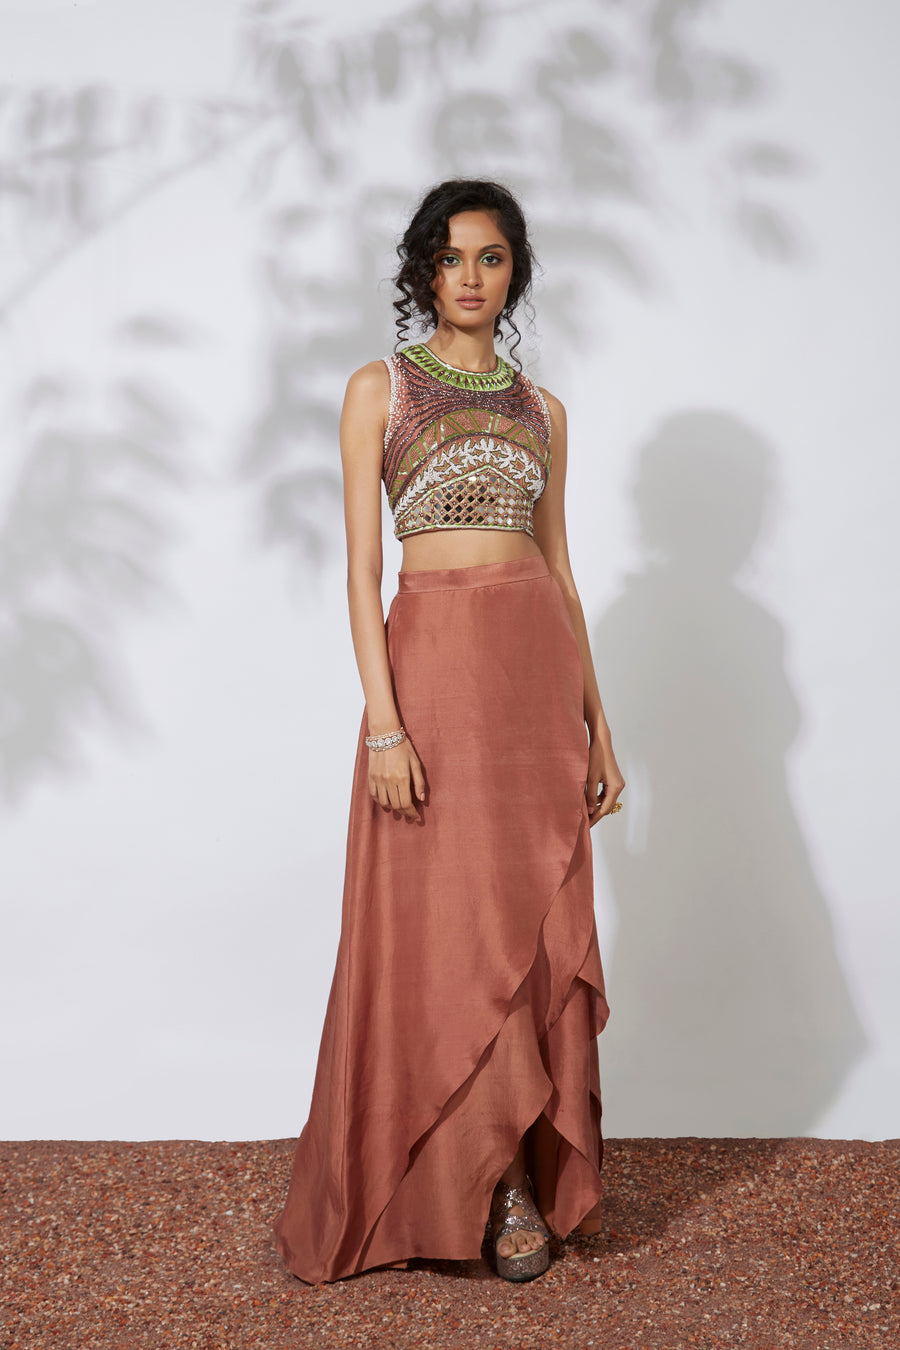 Mehak Murpana| Skirt & Crop Top | Indian Wedding Wear for sangeet and mehndi.